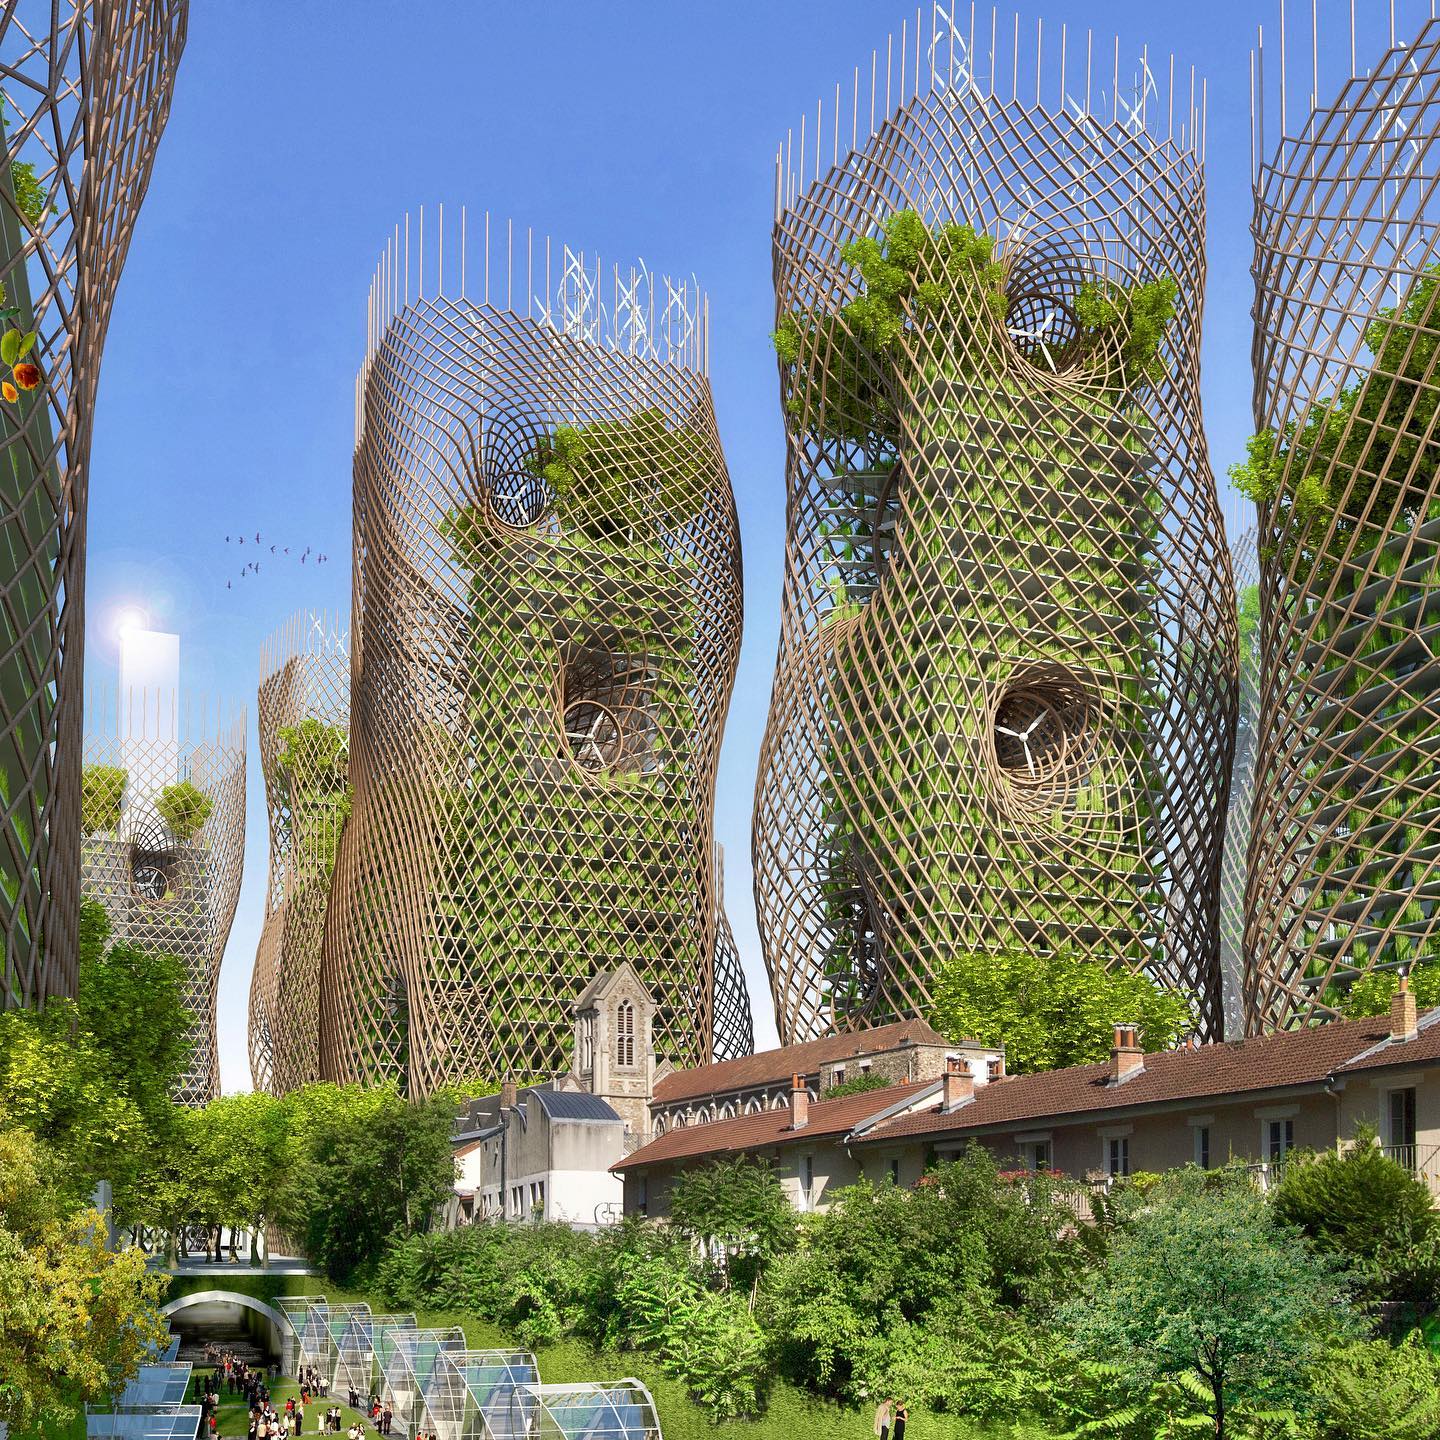 Vincent Callebaut's Green Architecture - on Thursd